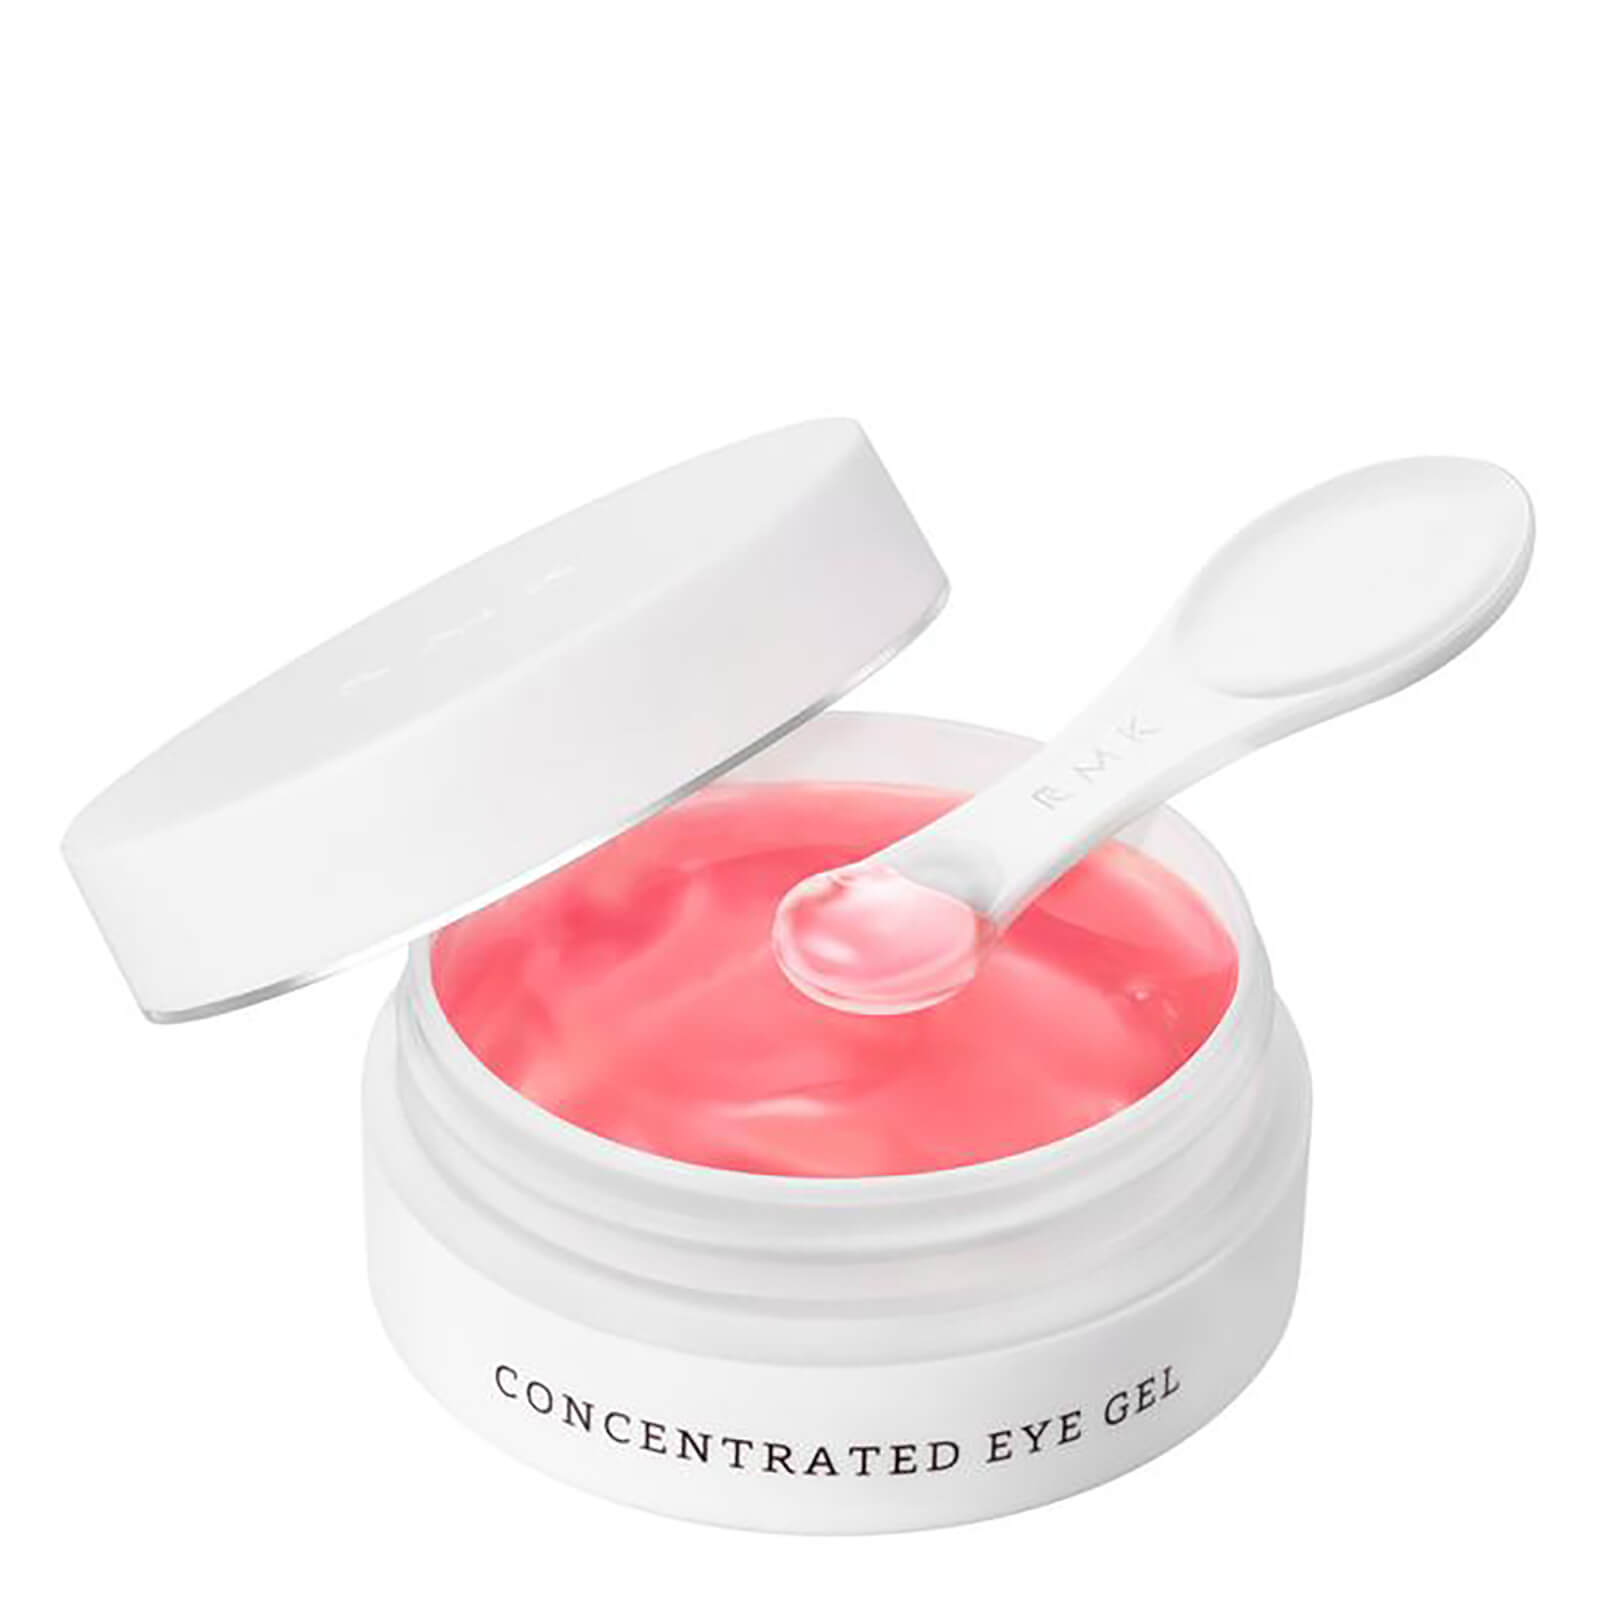 RMK Concentrated Eye Gel (20g)